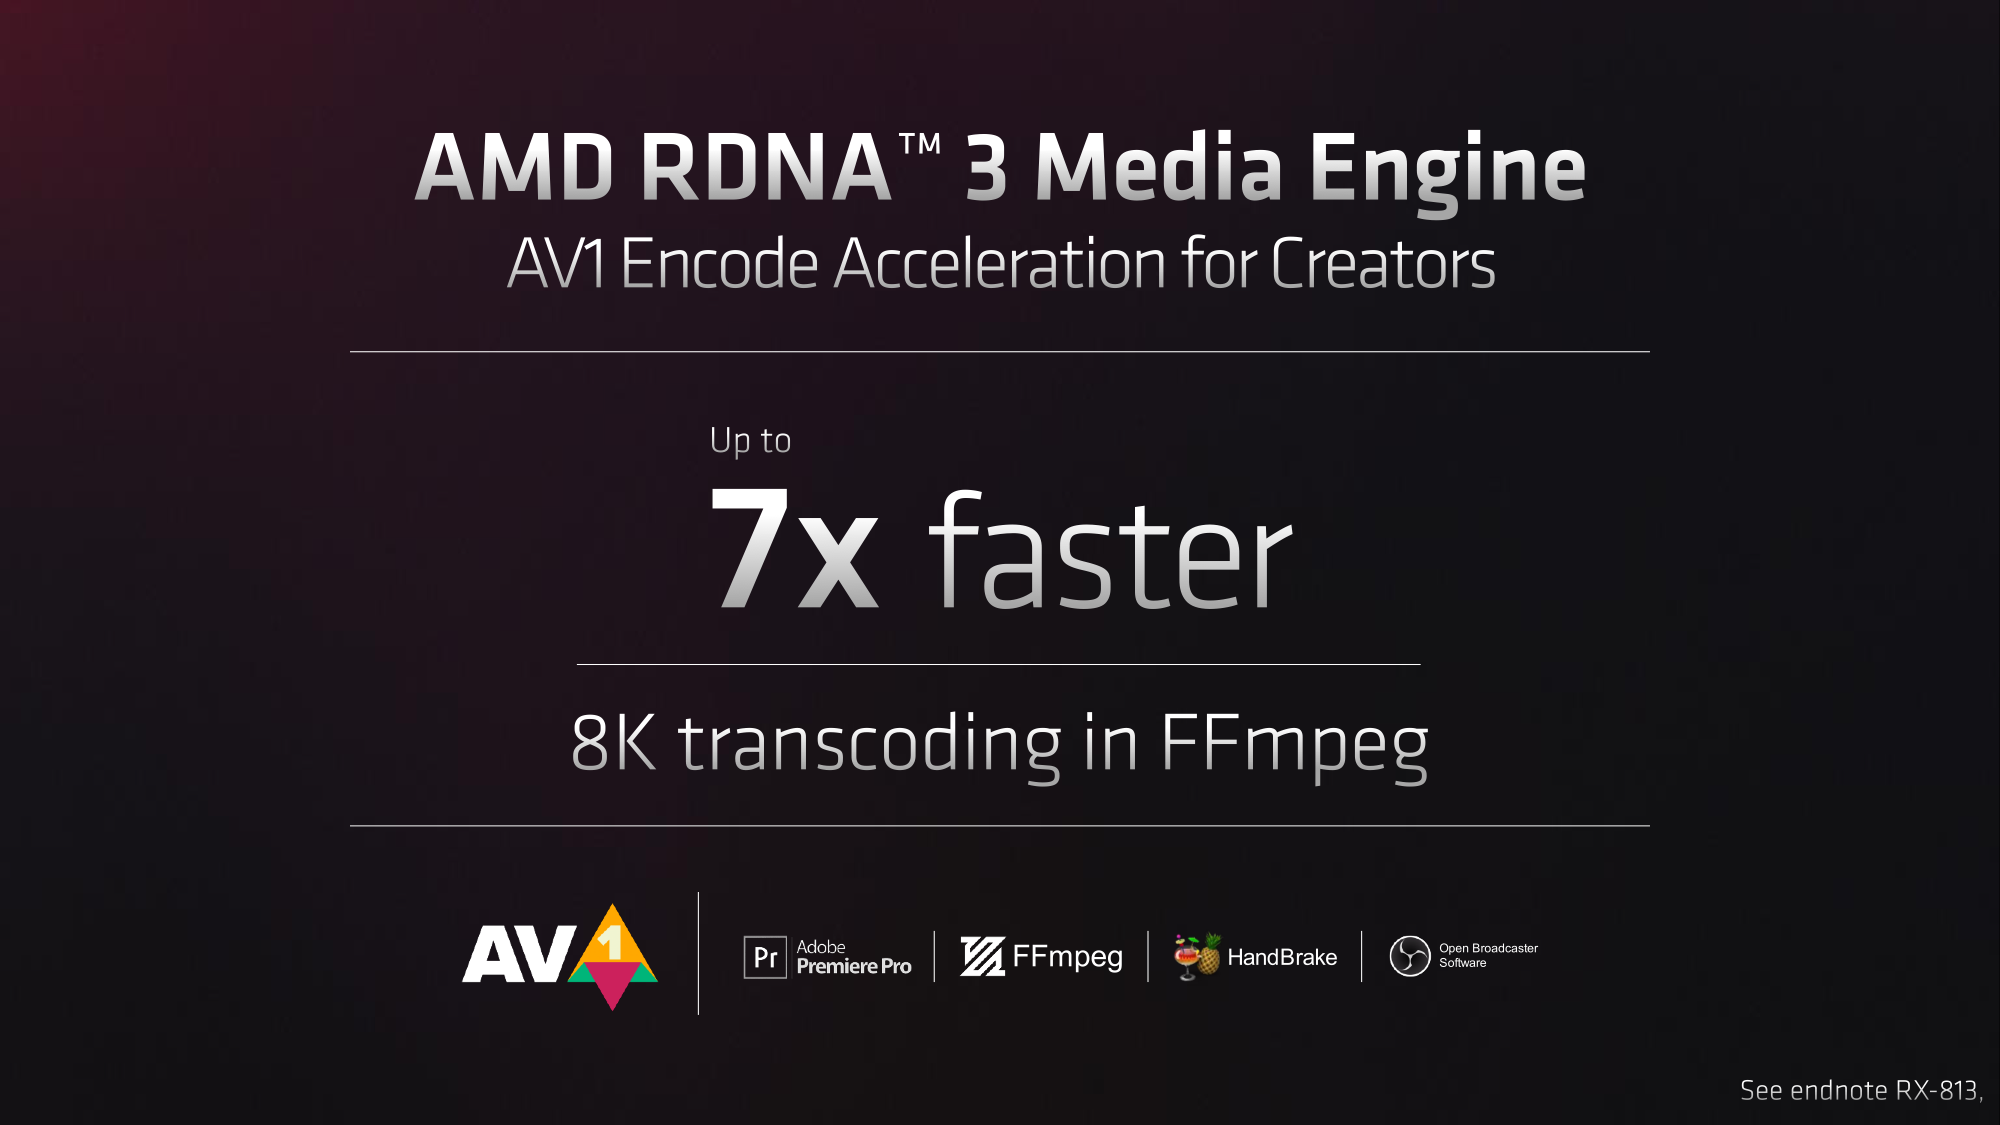 AMD Launches RDNA 3, RX 7900 XT and XTX, Its Next-Gen GPU and Tech - CNET